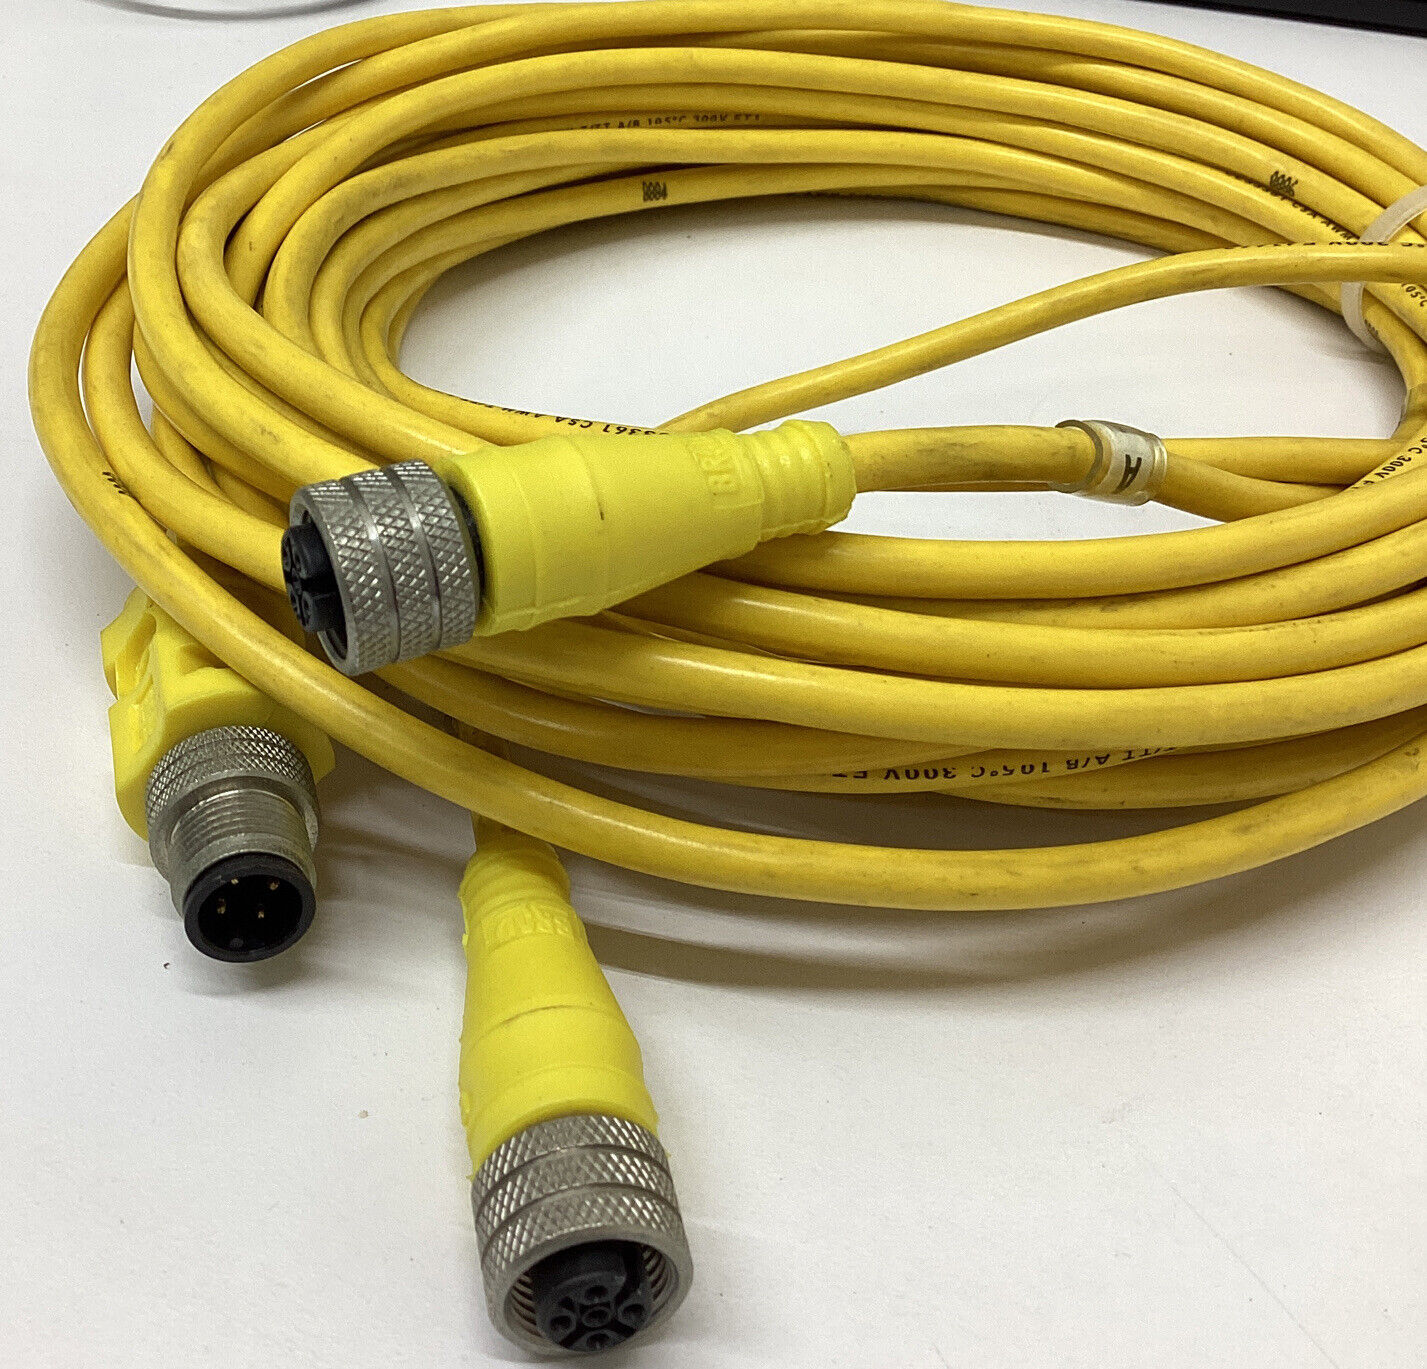 Brad WoodHead 1200680181/884A30A09M050 AP In-line Split Cable (CBL107)